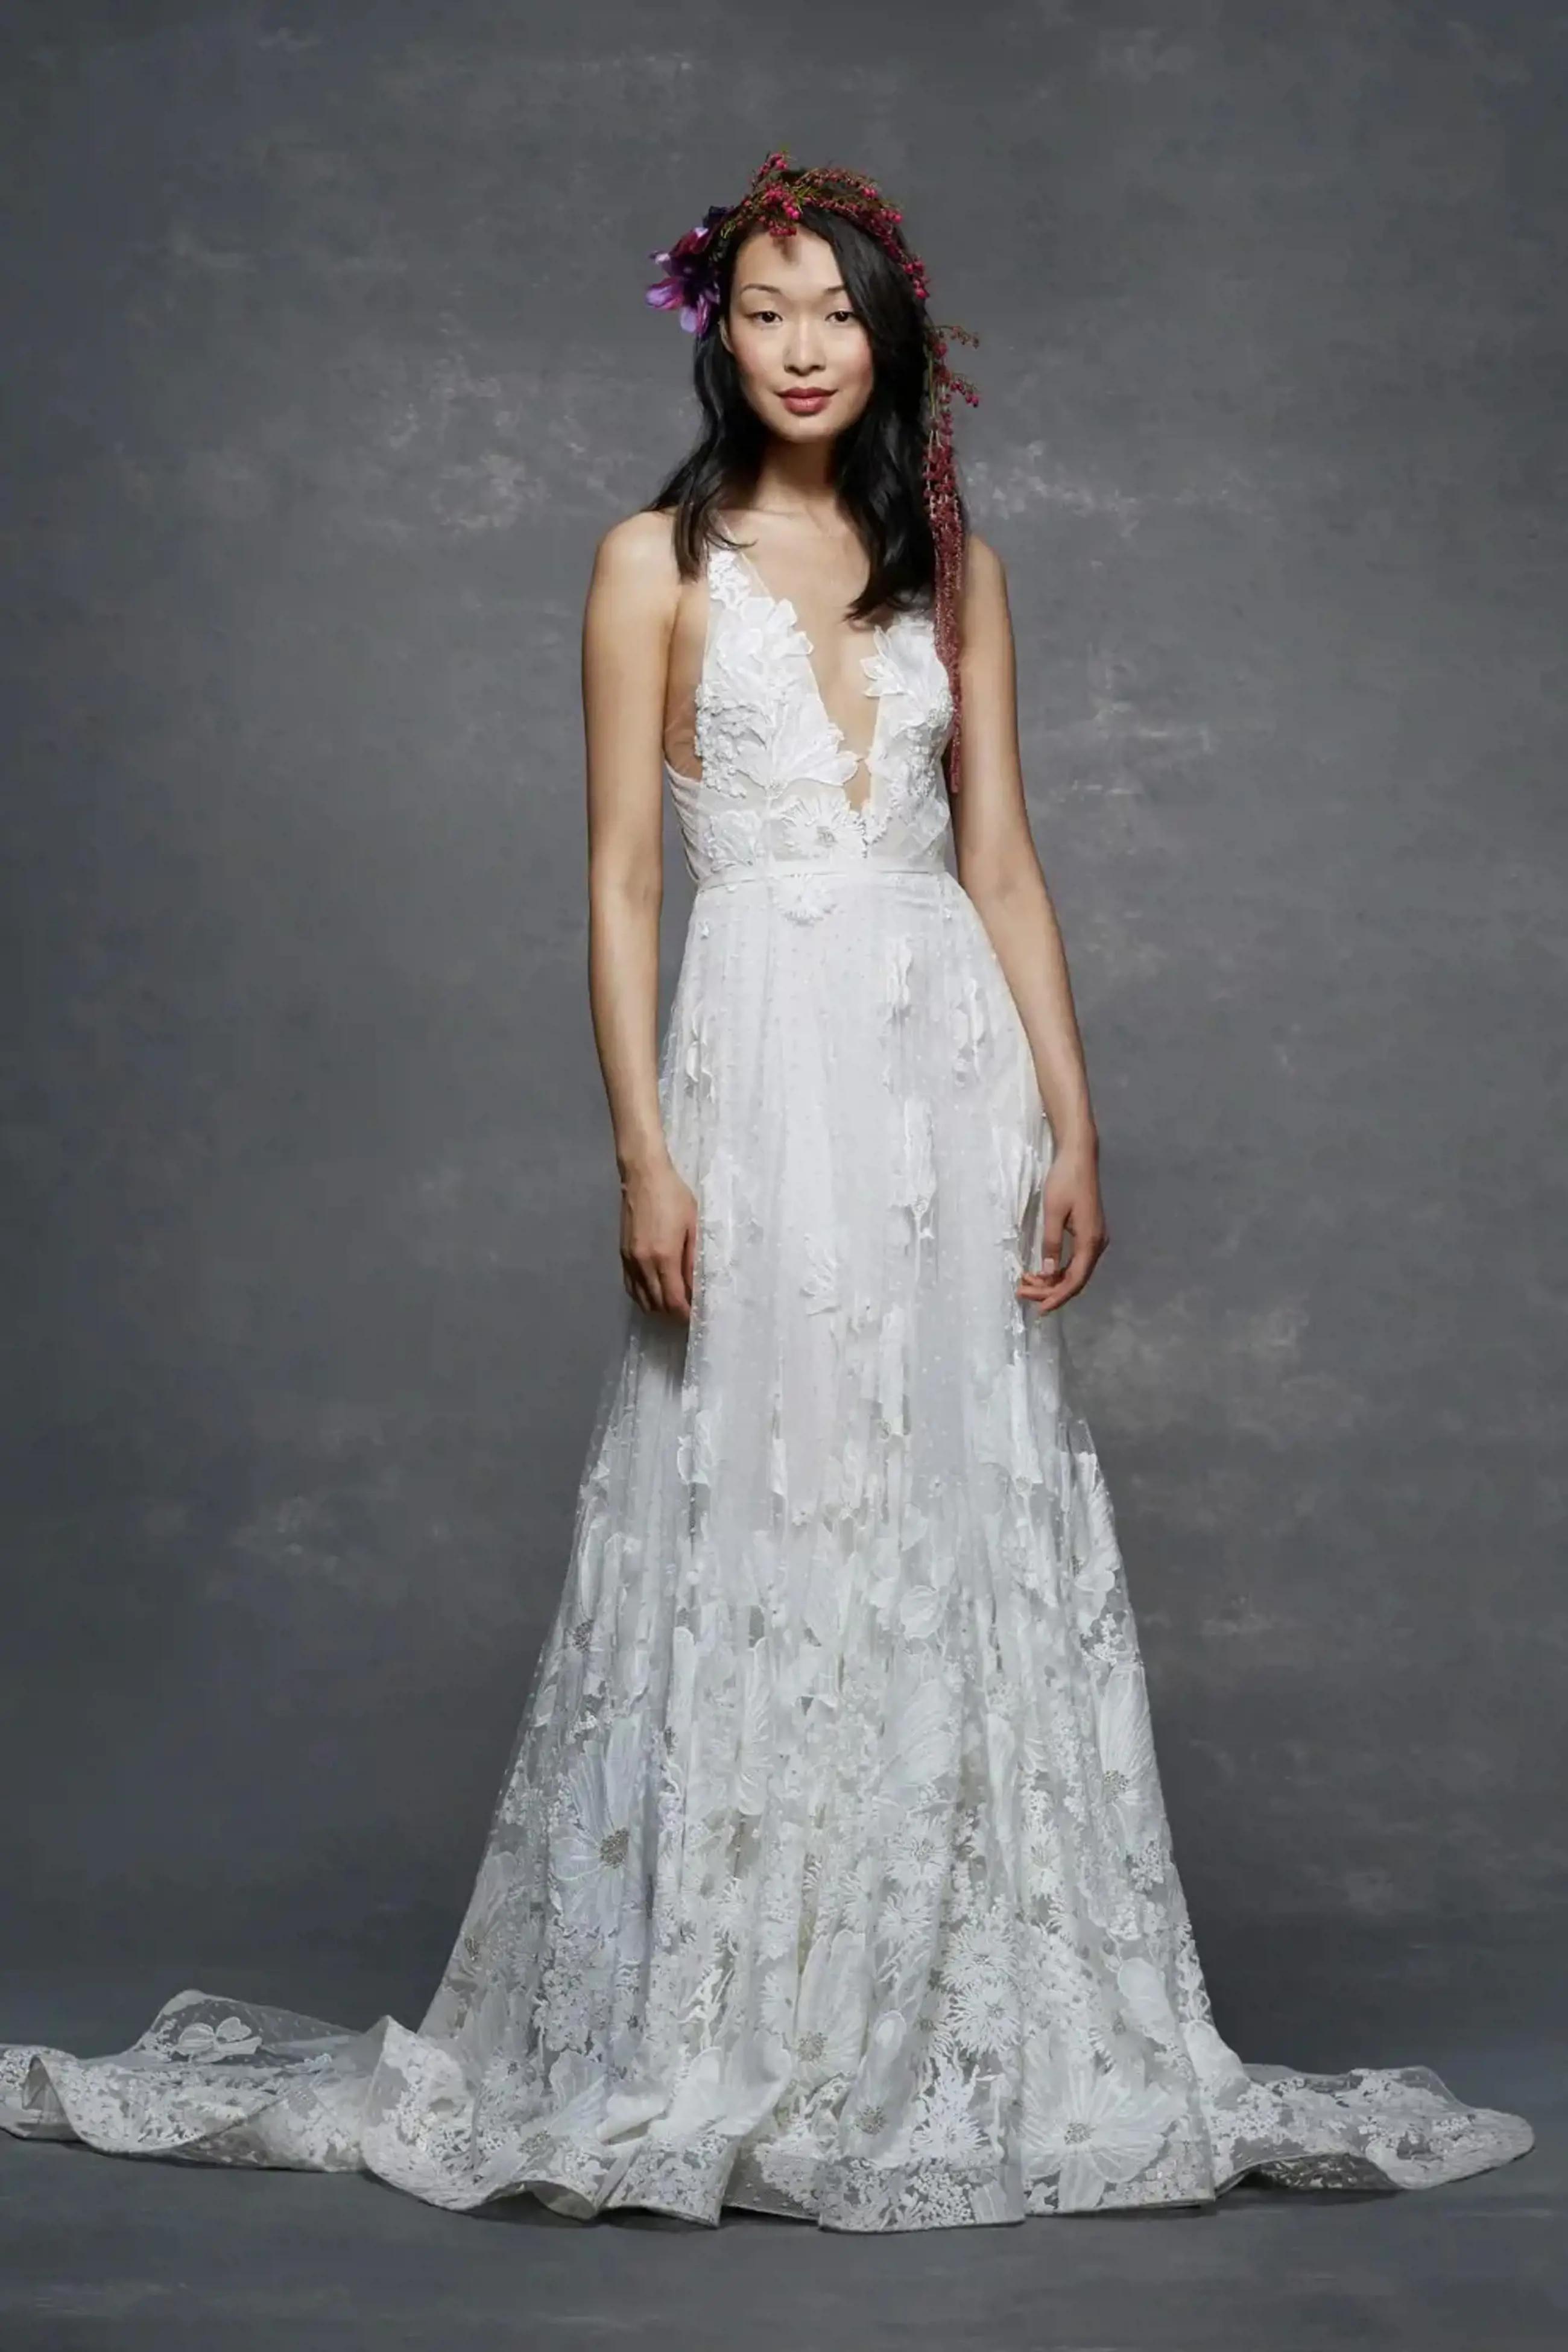 Model wearing a Marchessa Notte gown